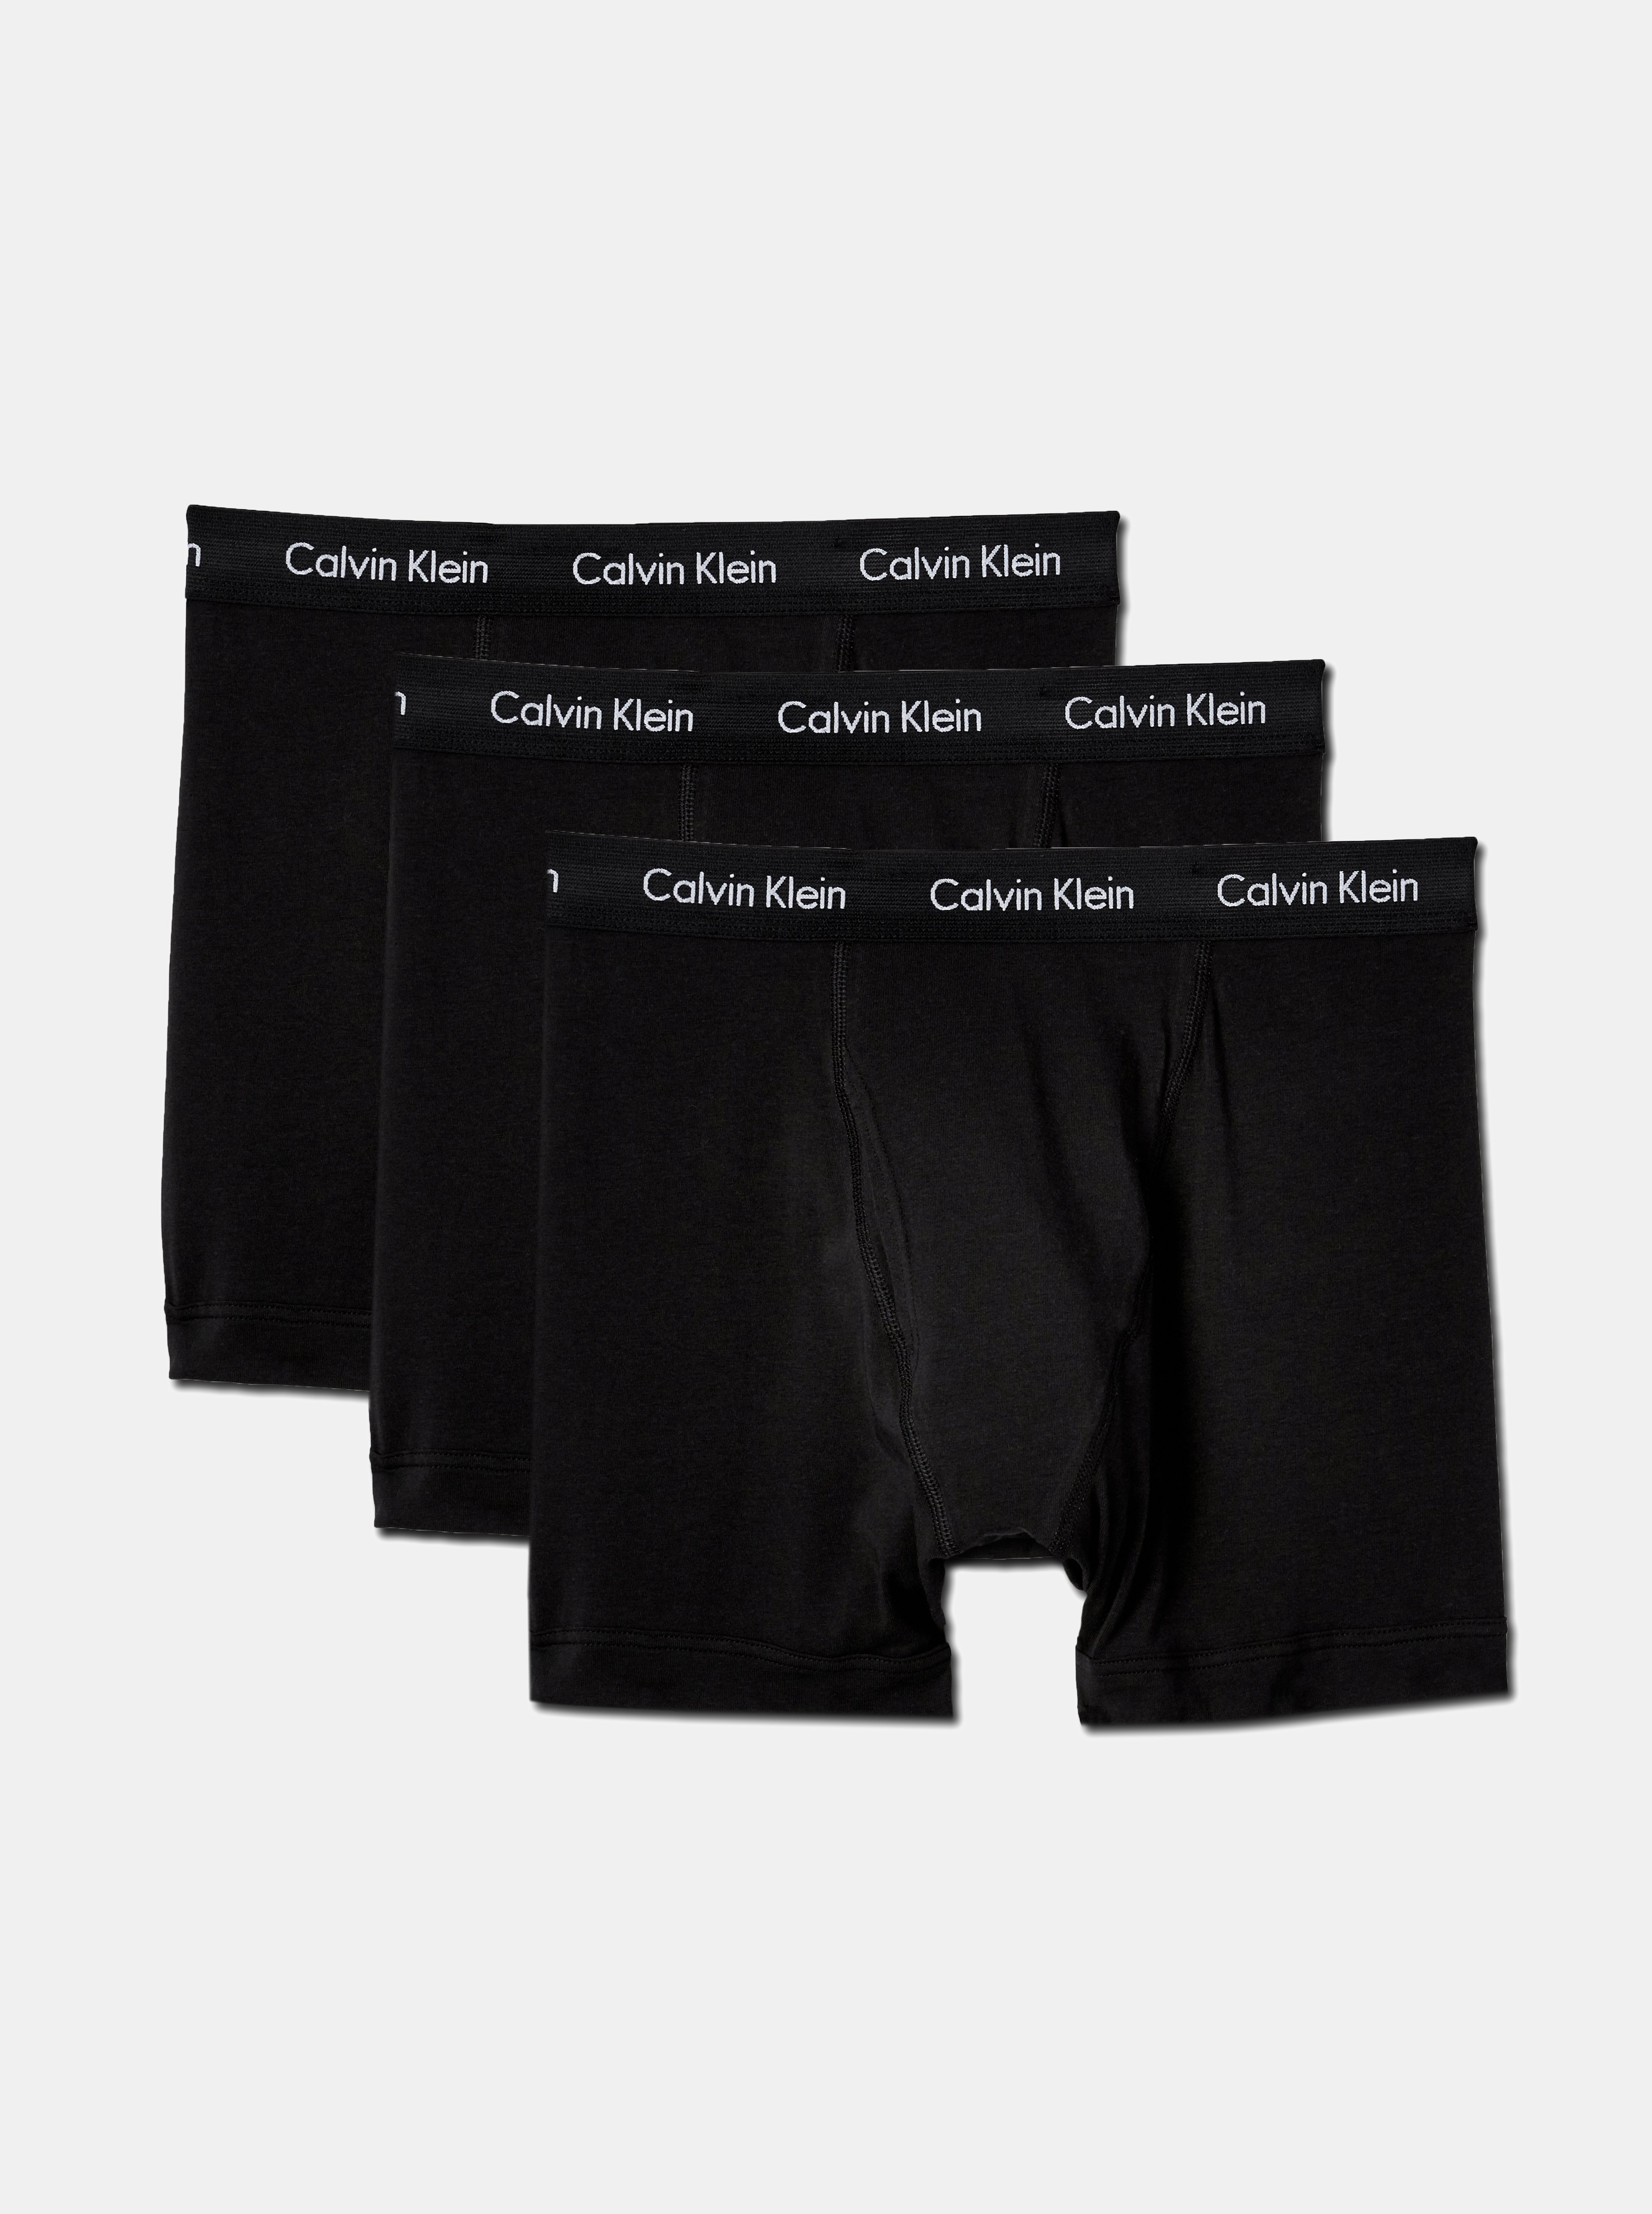 calvin klein brief boxers